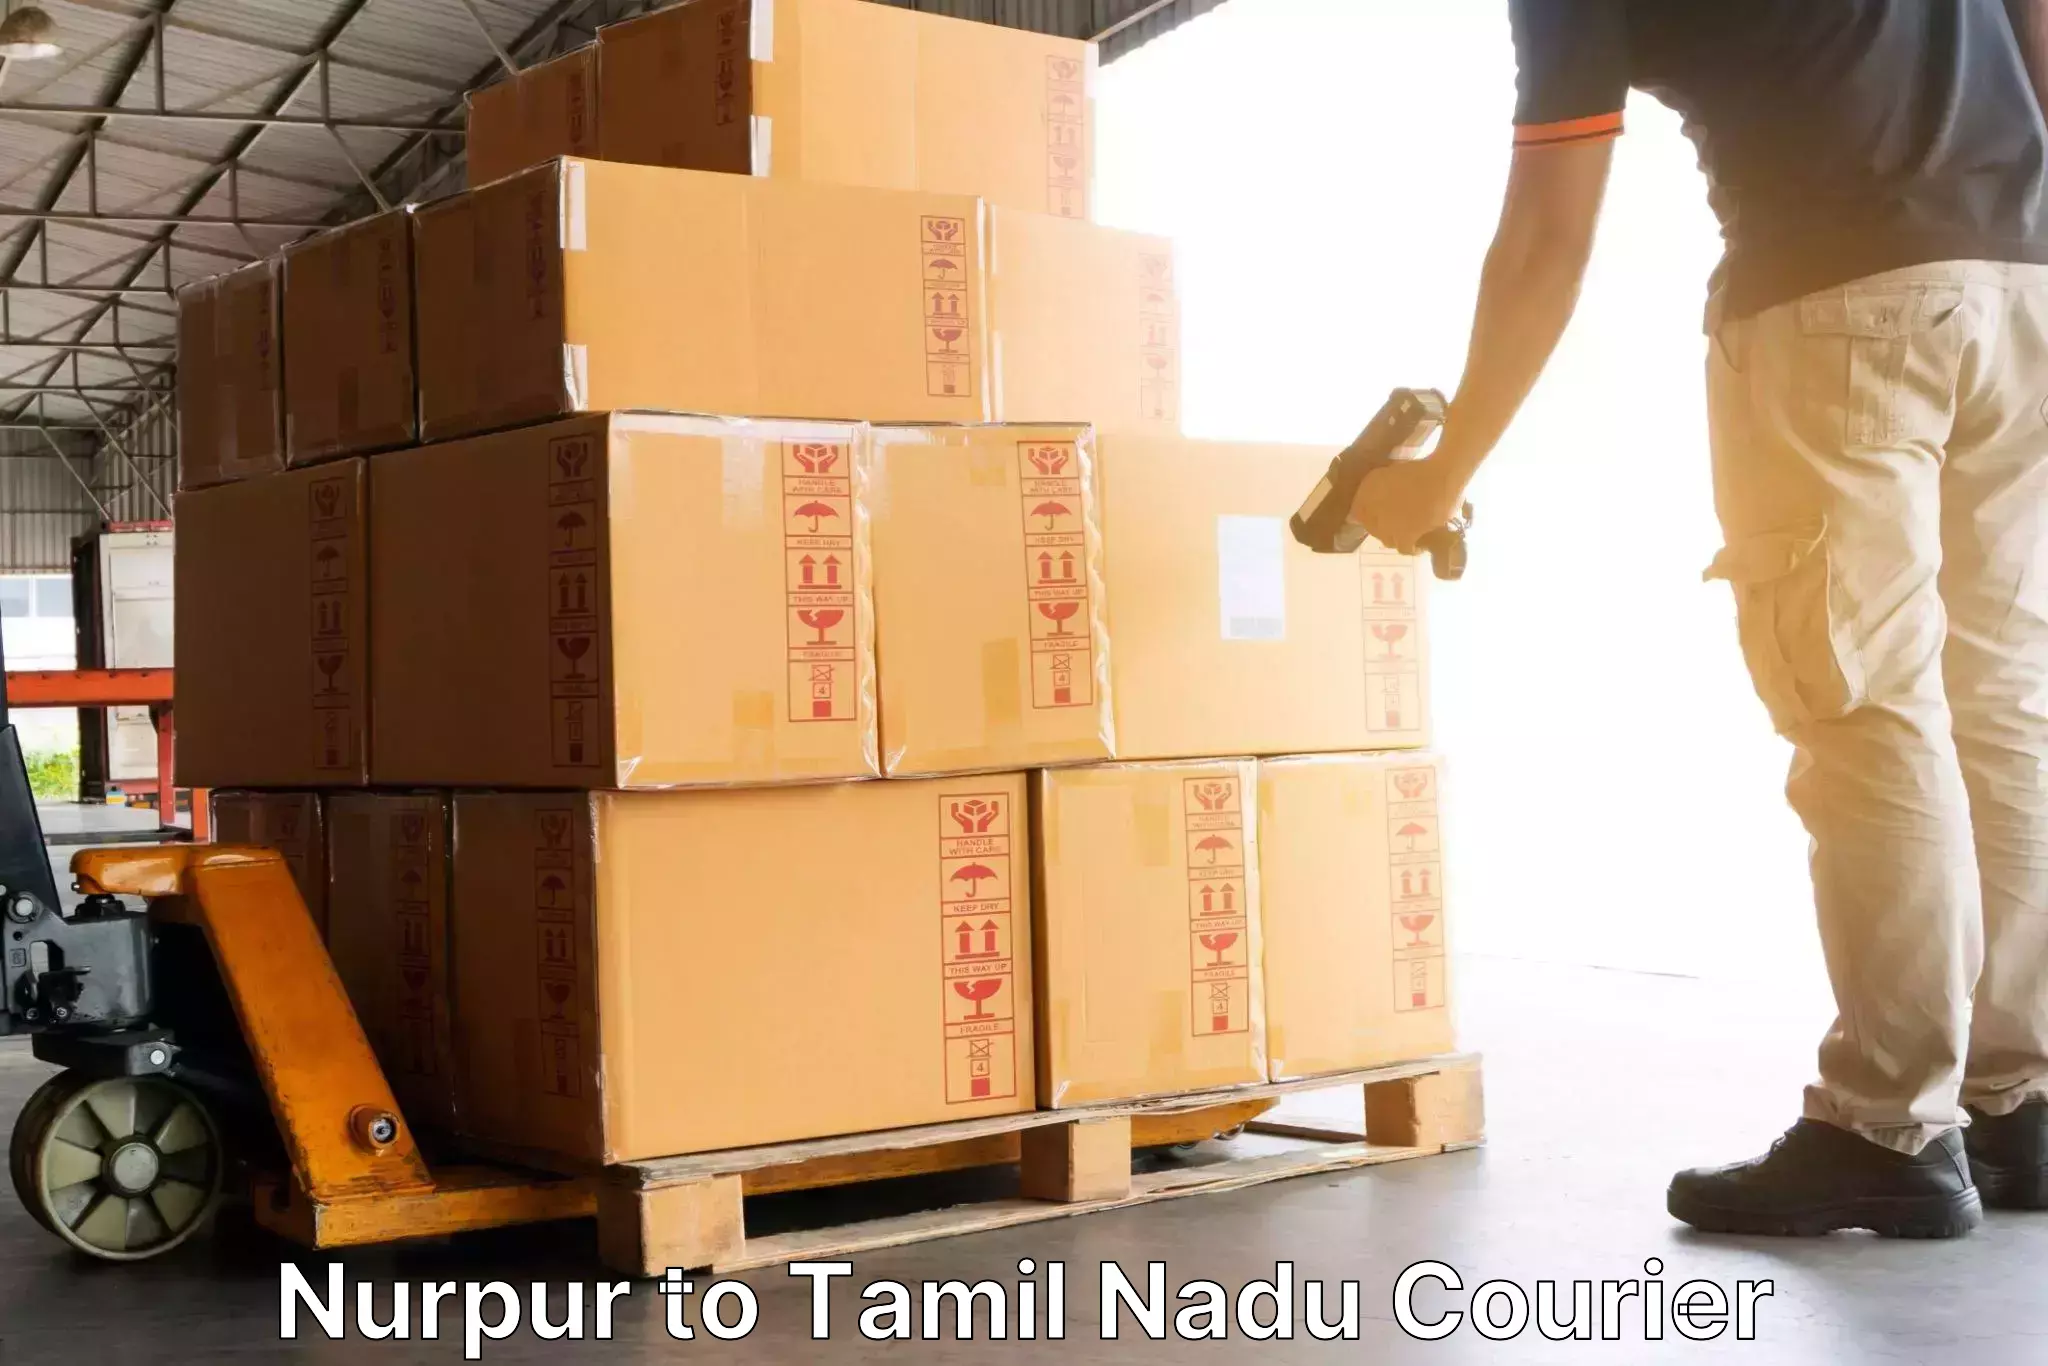 Efficient freight service Nurpur to Nagapattinam